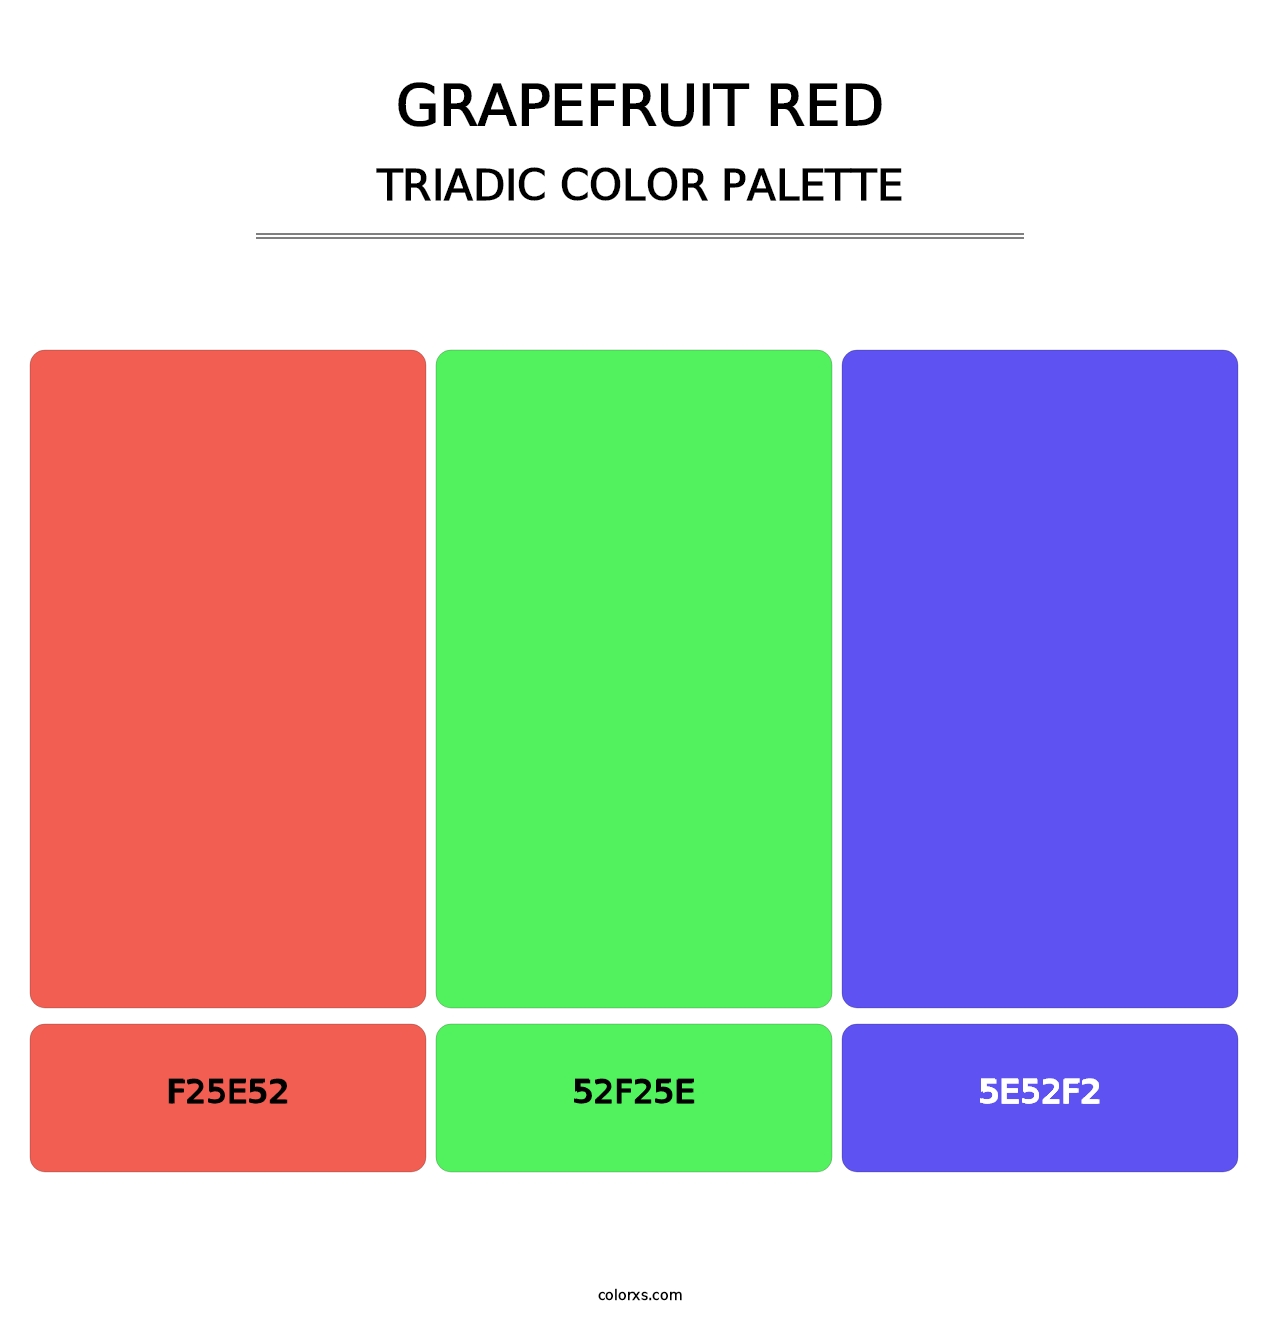 Grapefruit Red - Triadic Color Palette